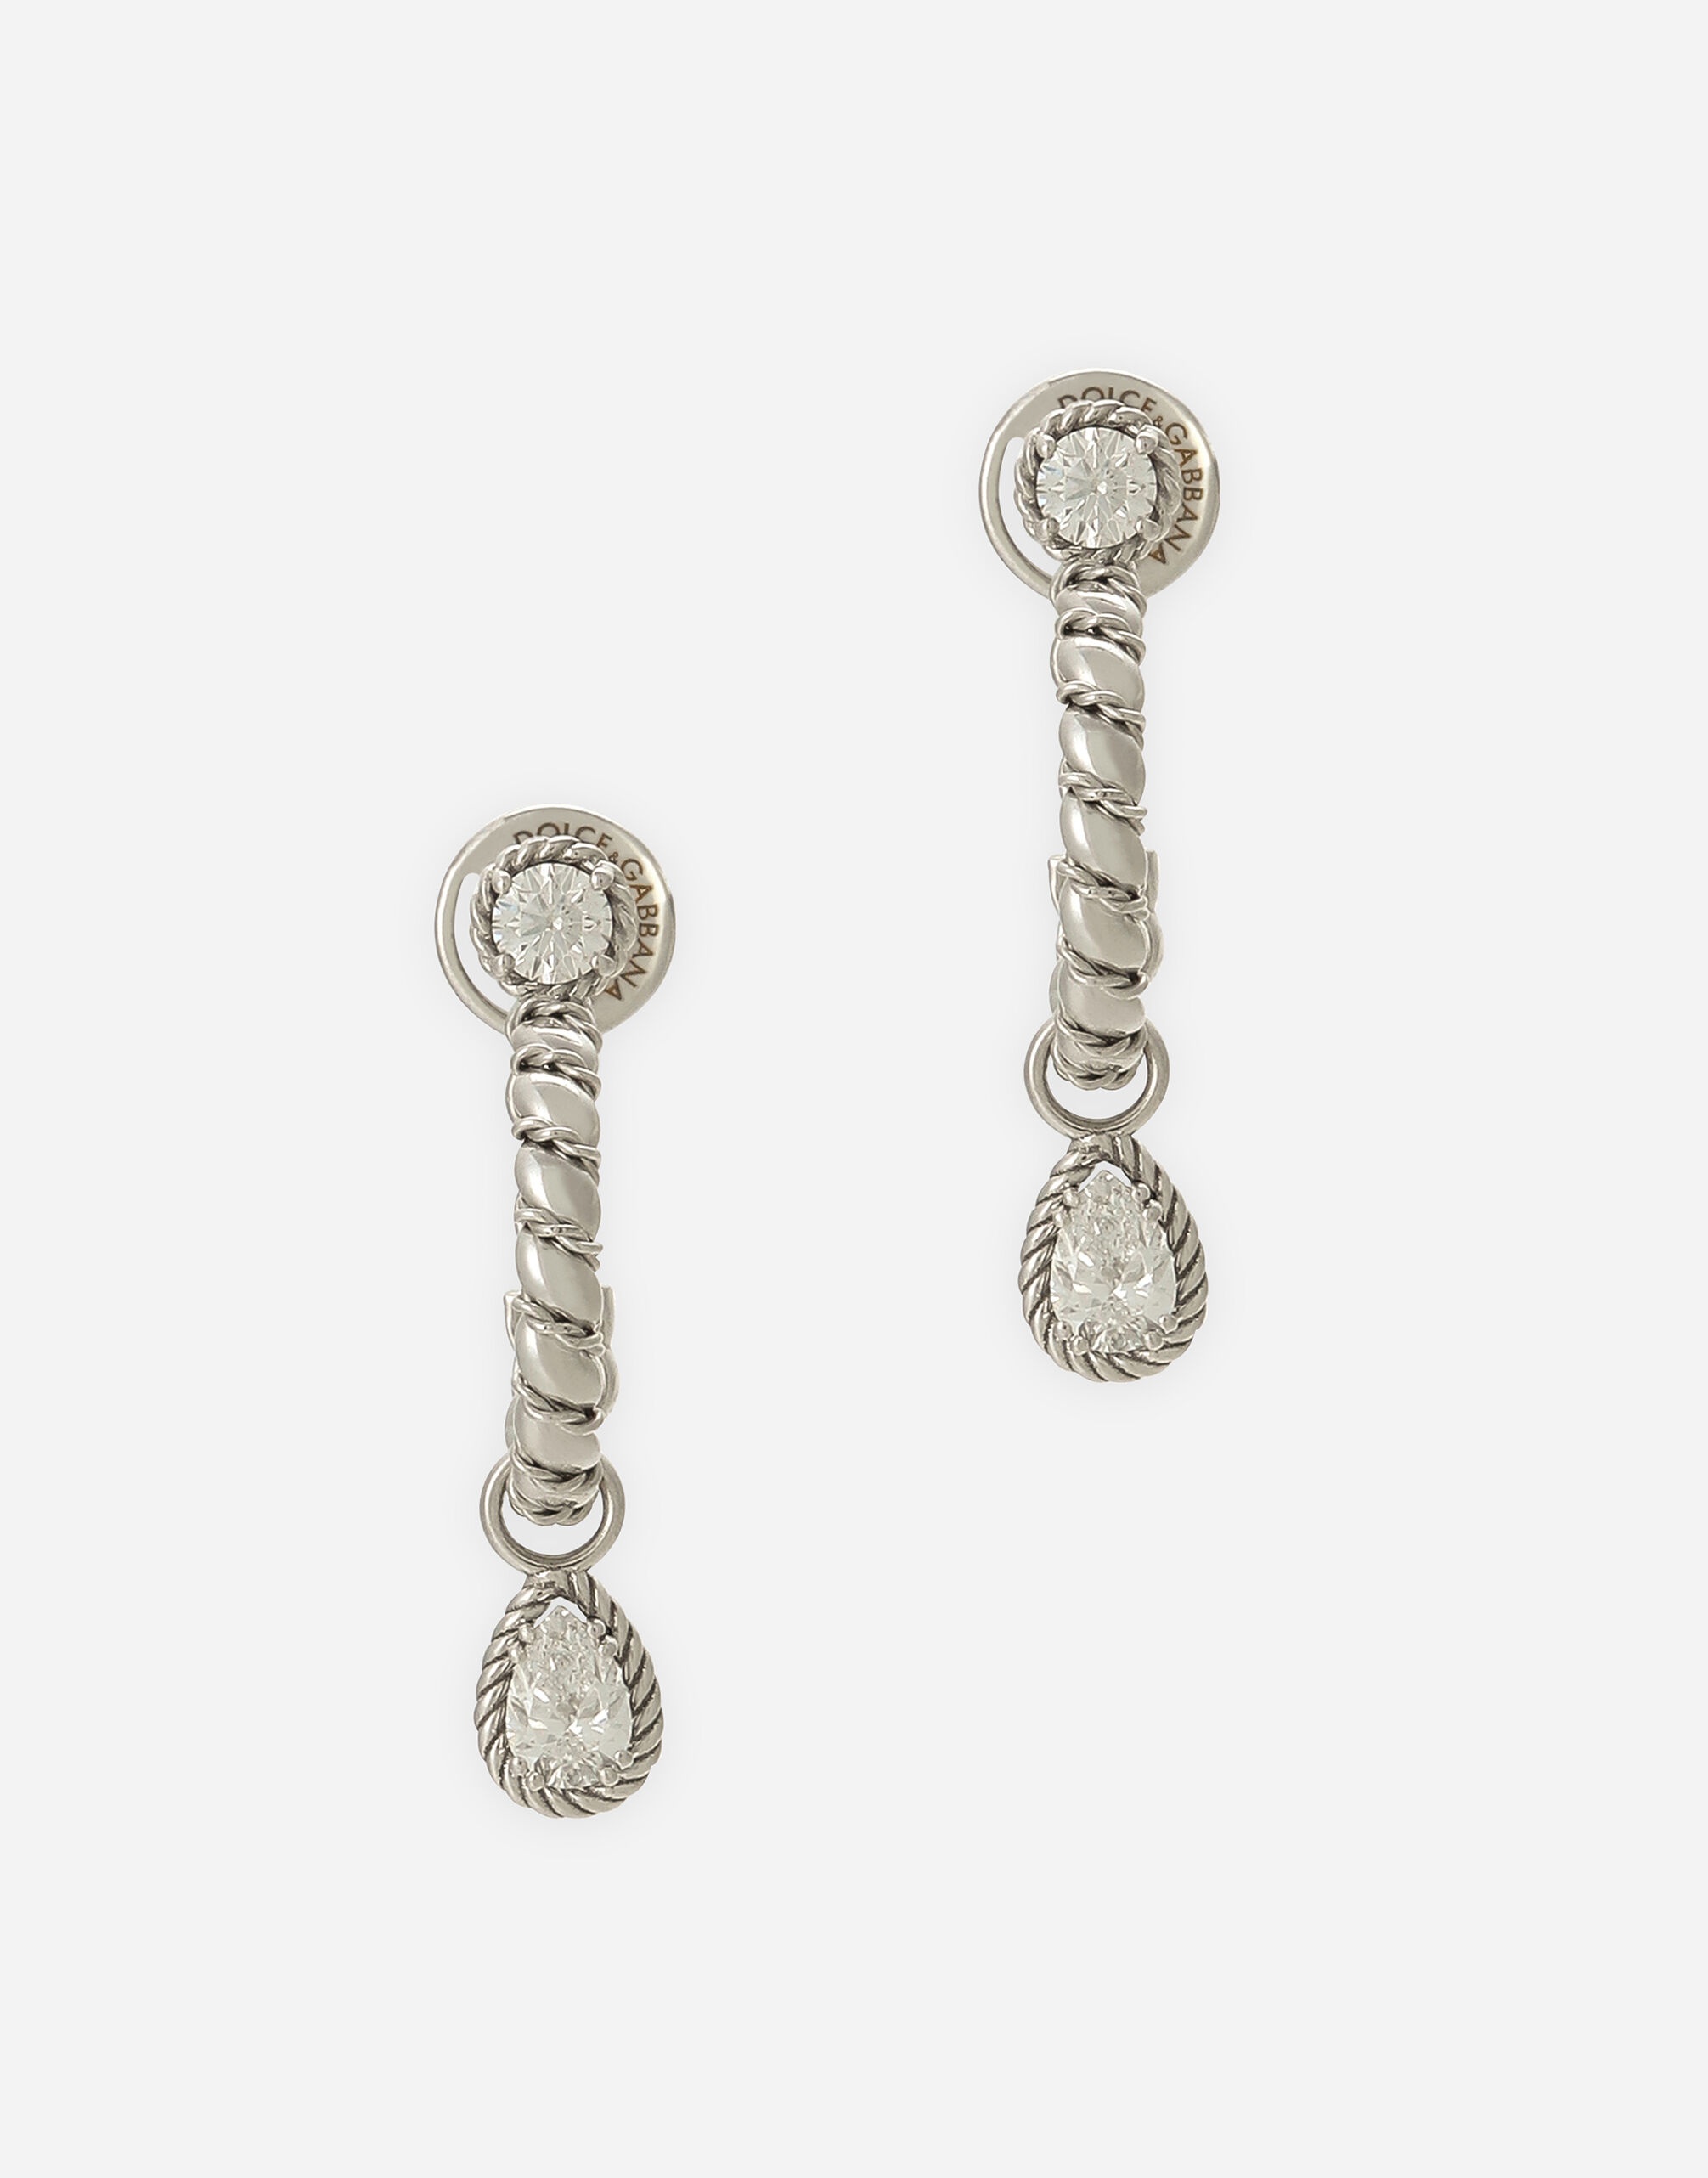 Easy Diamond earrings in white gold 18Kt and diamonds - 1